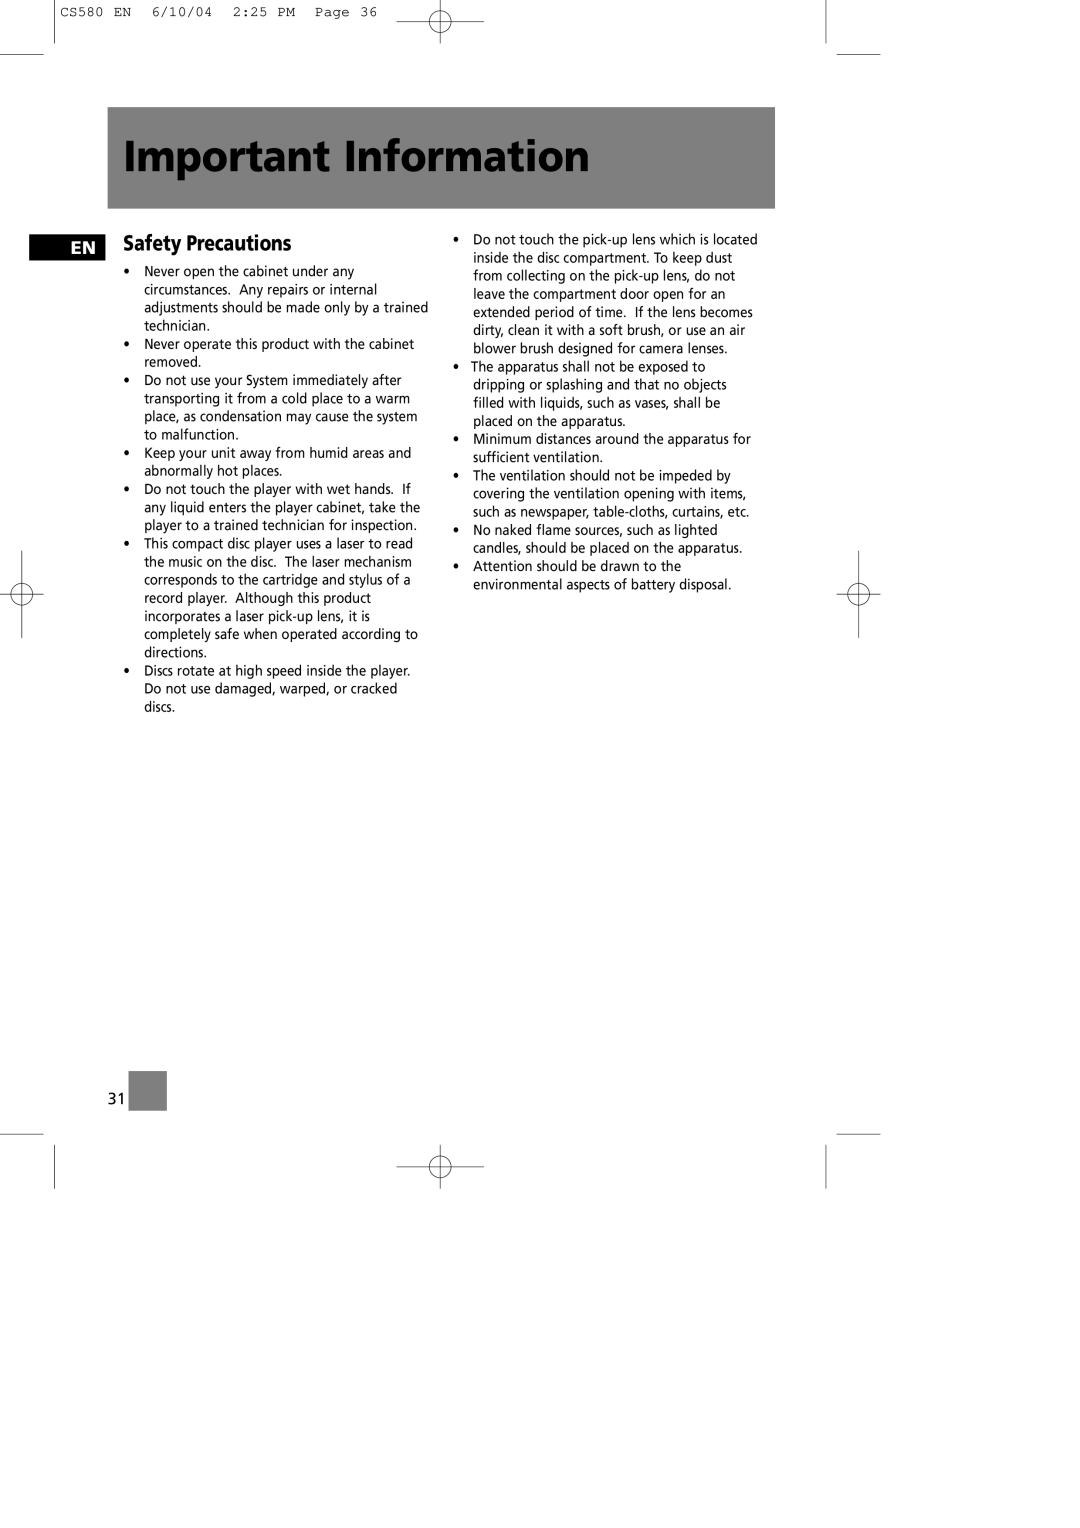 Technicolor - Thomson CS580 manual Important Information, EN Safety Precautions 